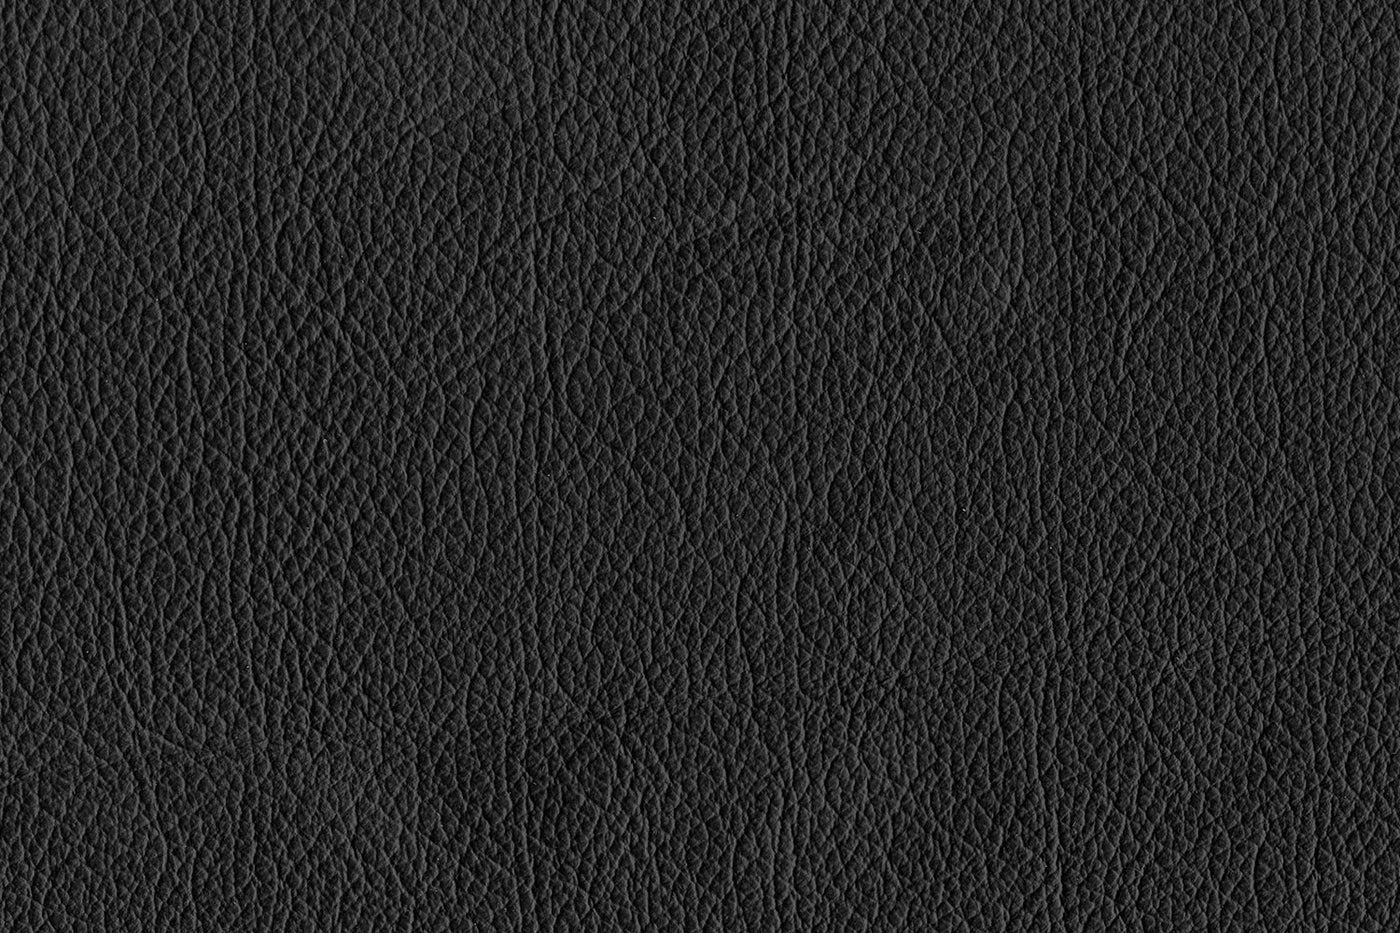 Reynolds Leather Sofa - Black